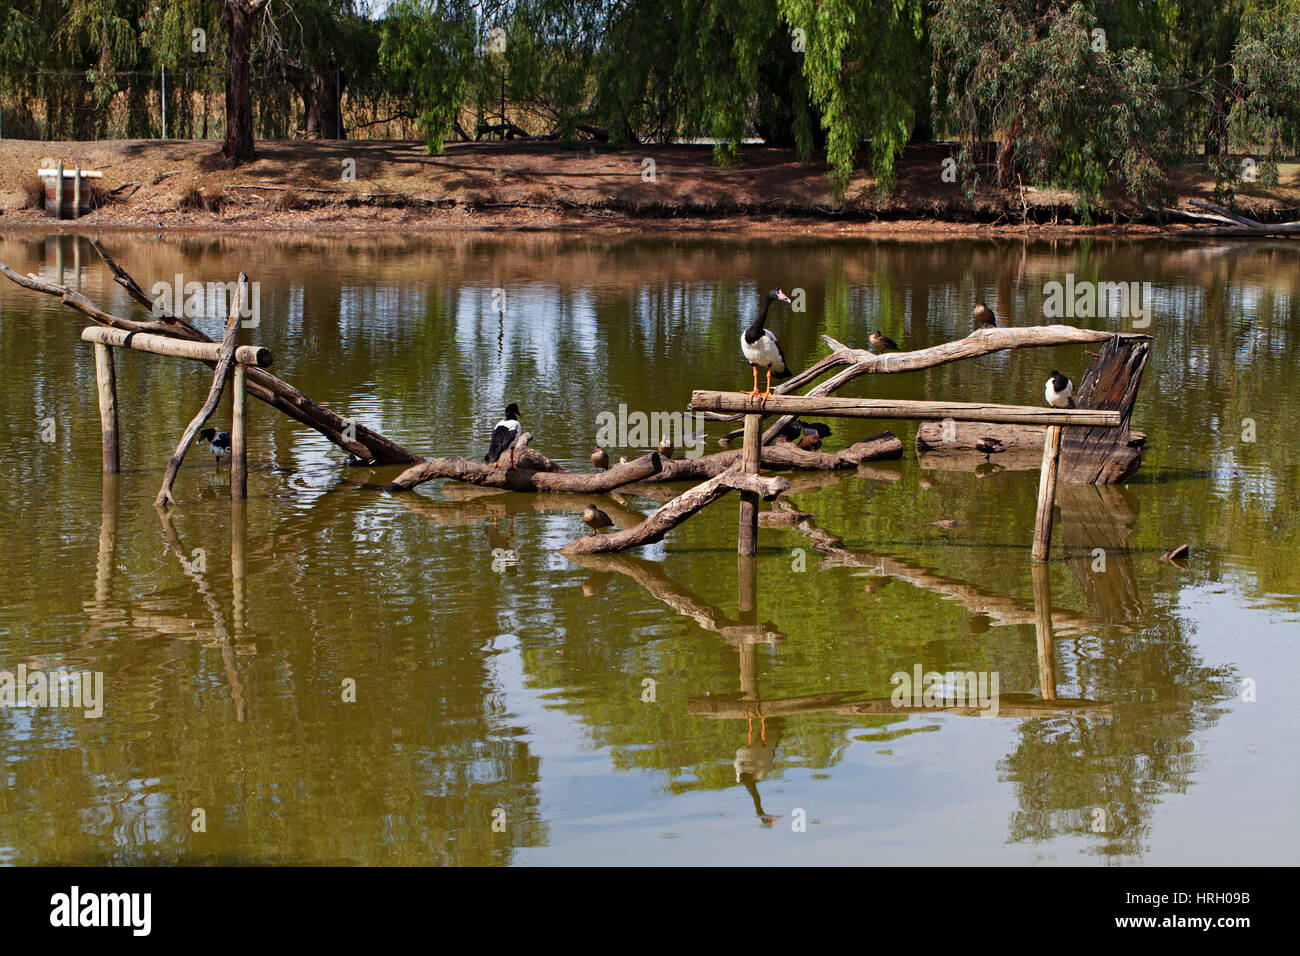 The Kyabram Fauna Park in Kyabram Victotia Australia.Birdlife in the wetlands of the park. Stock Photo